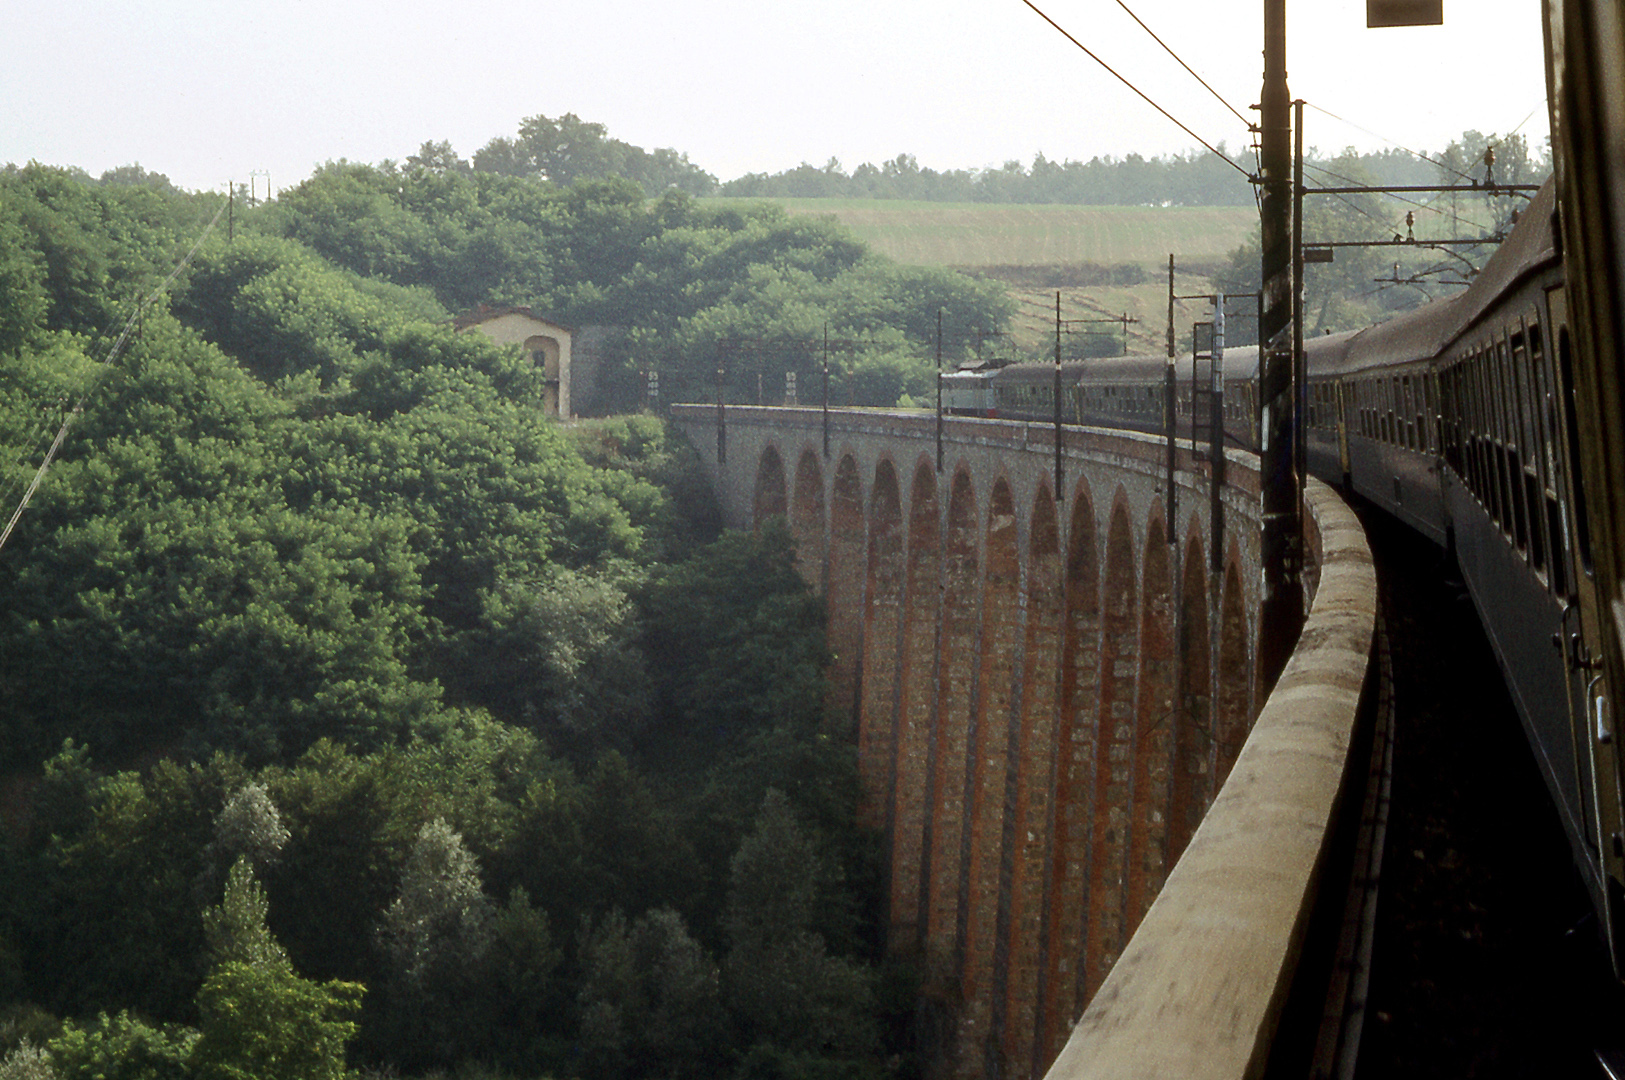 Spoorbrug in Toscane, Itali, Railway viaduct in Tuscany, Italy